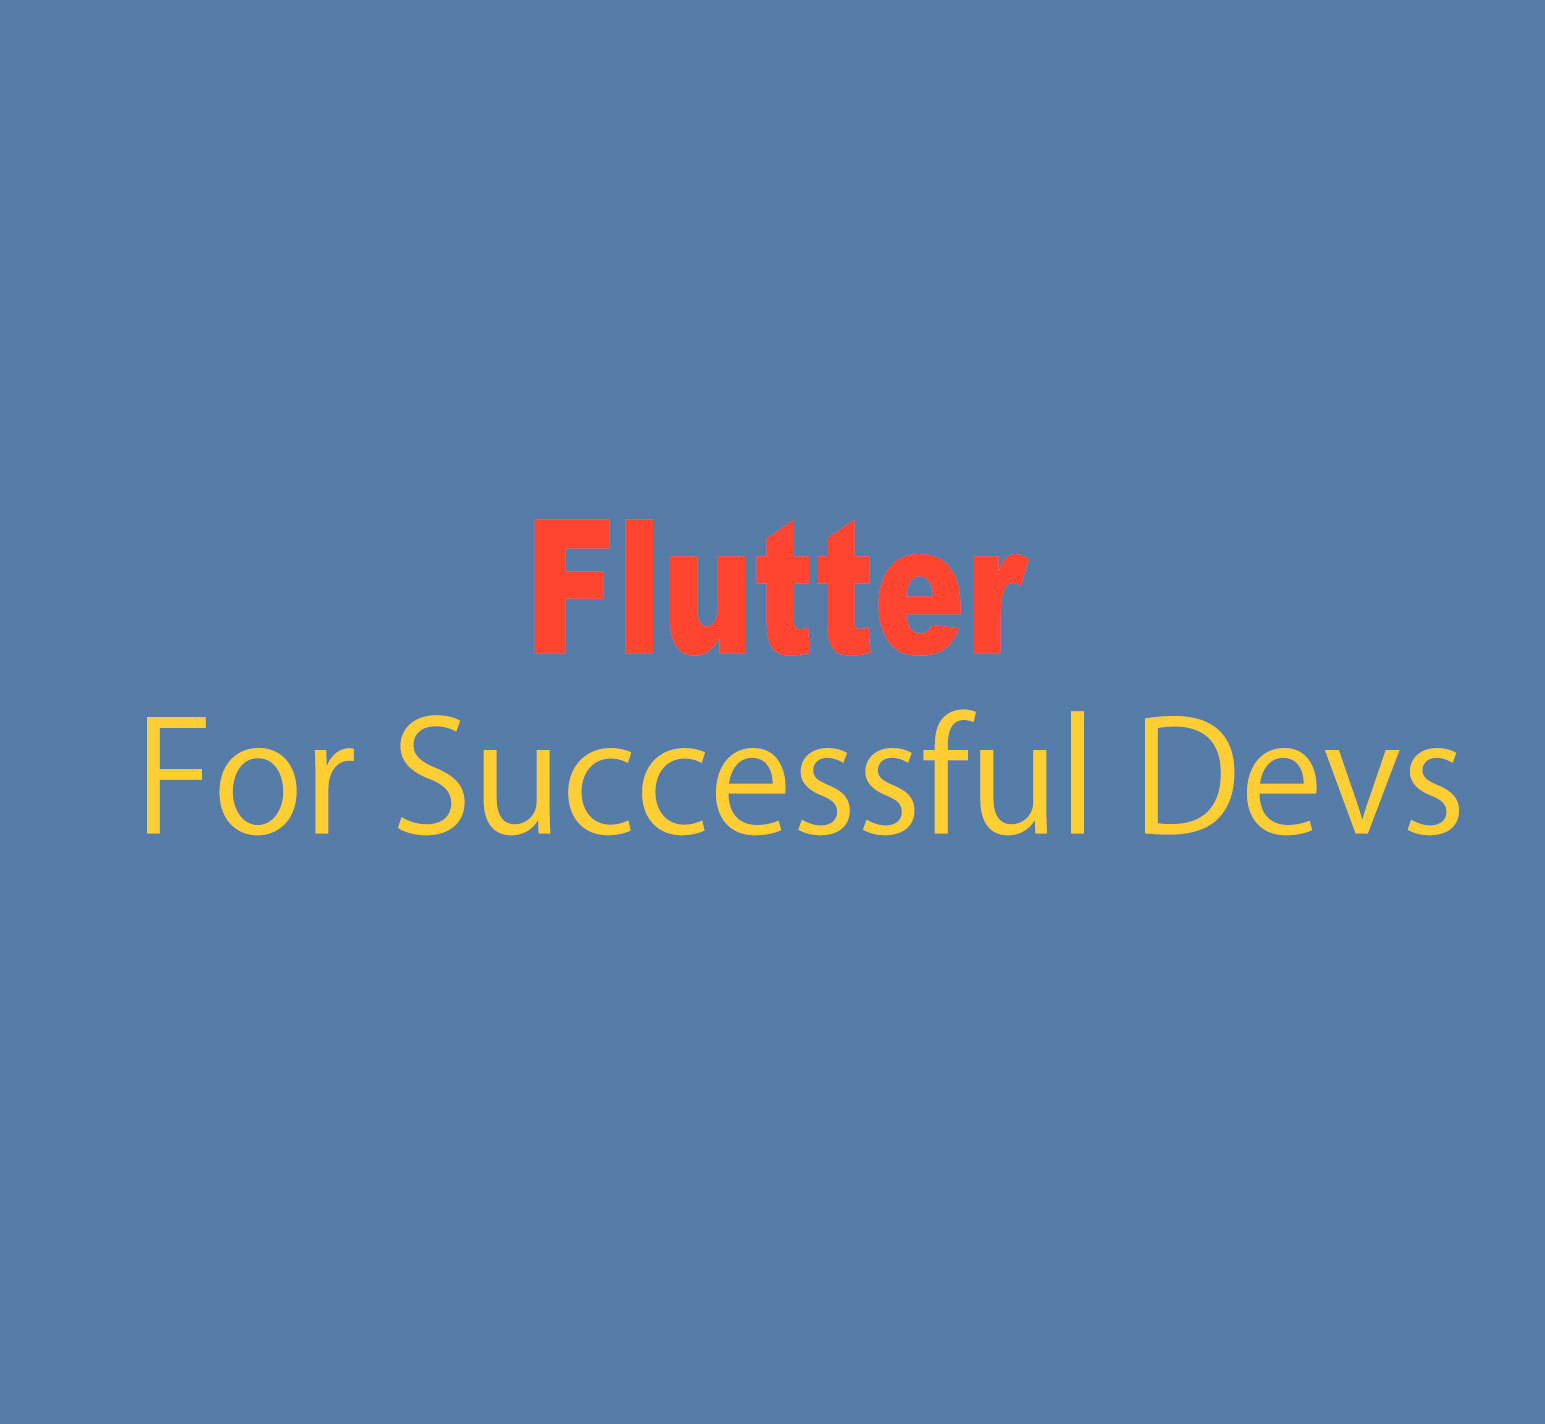 A successful Flutter developer